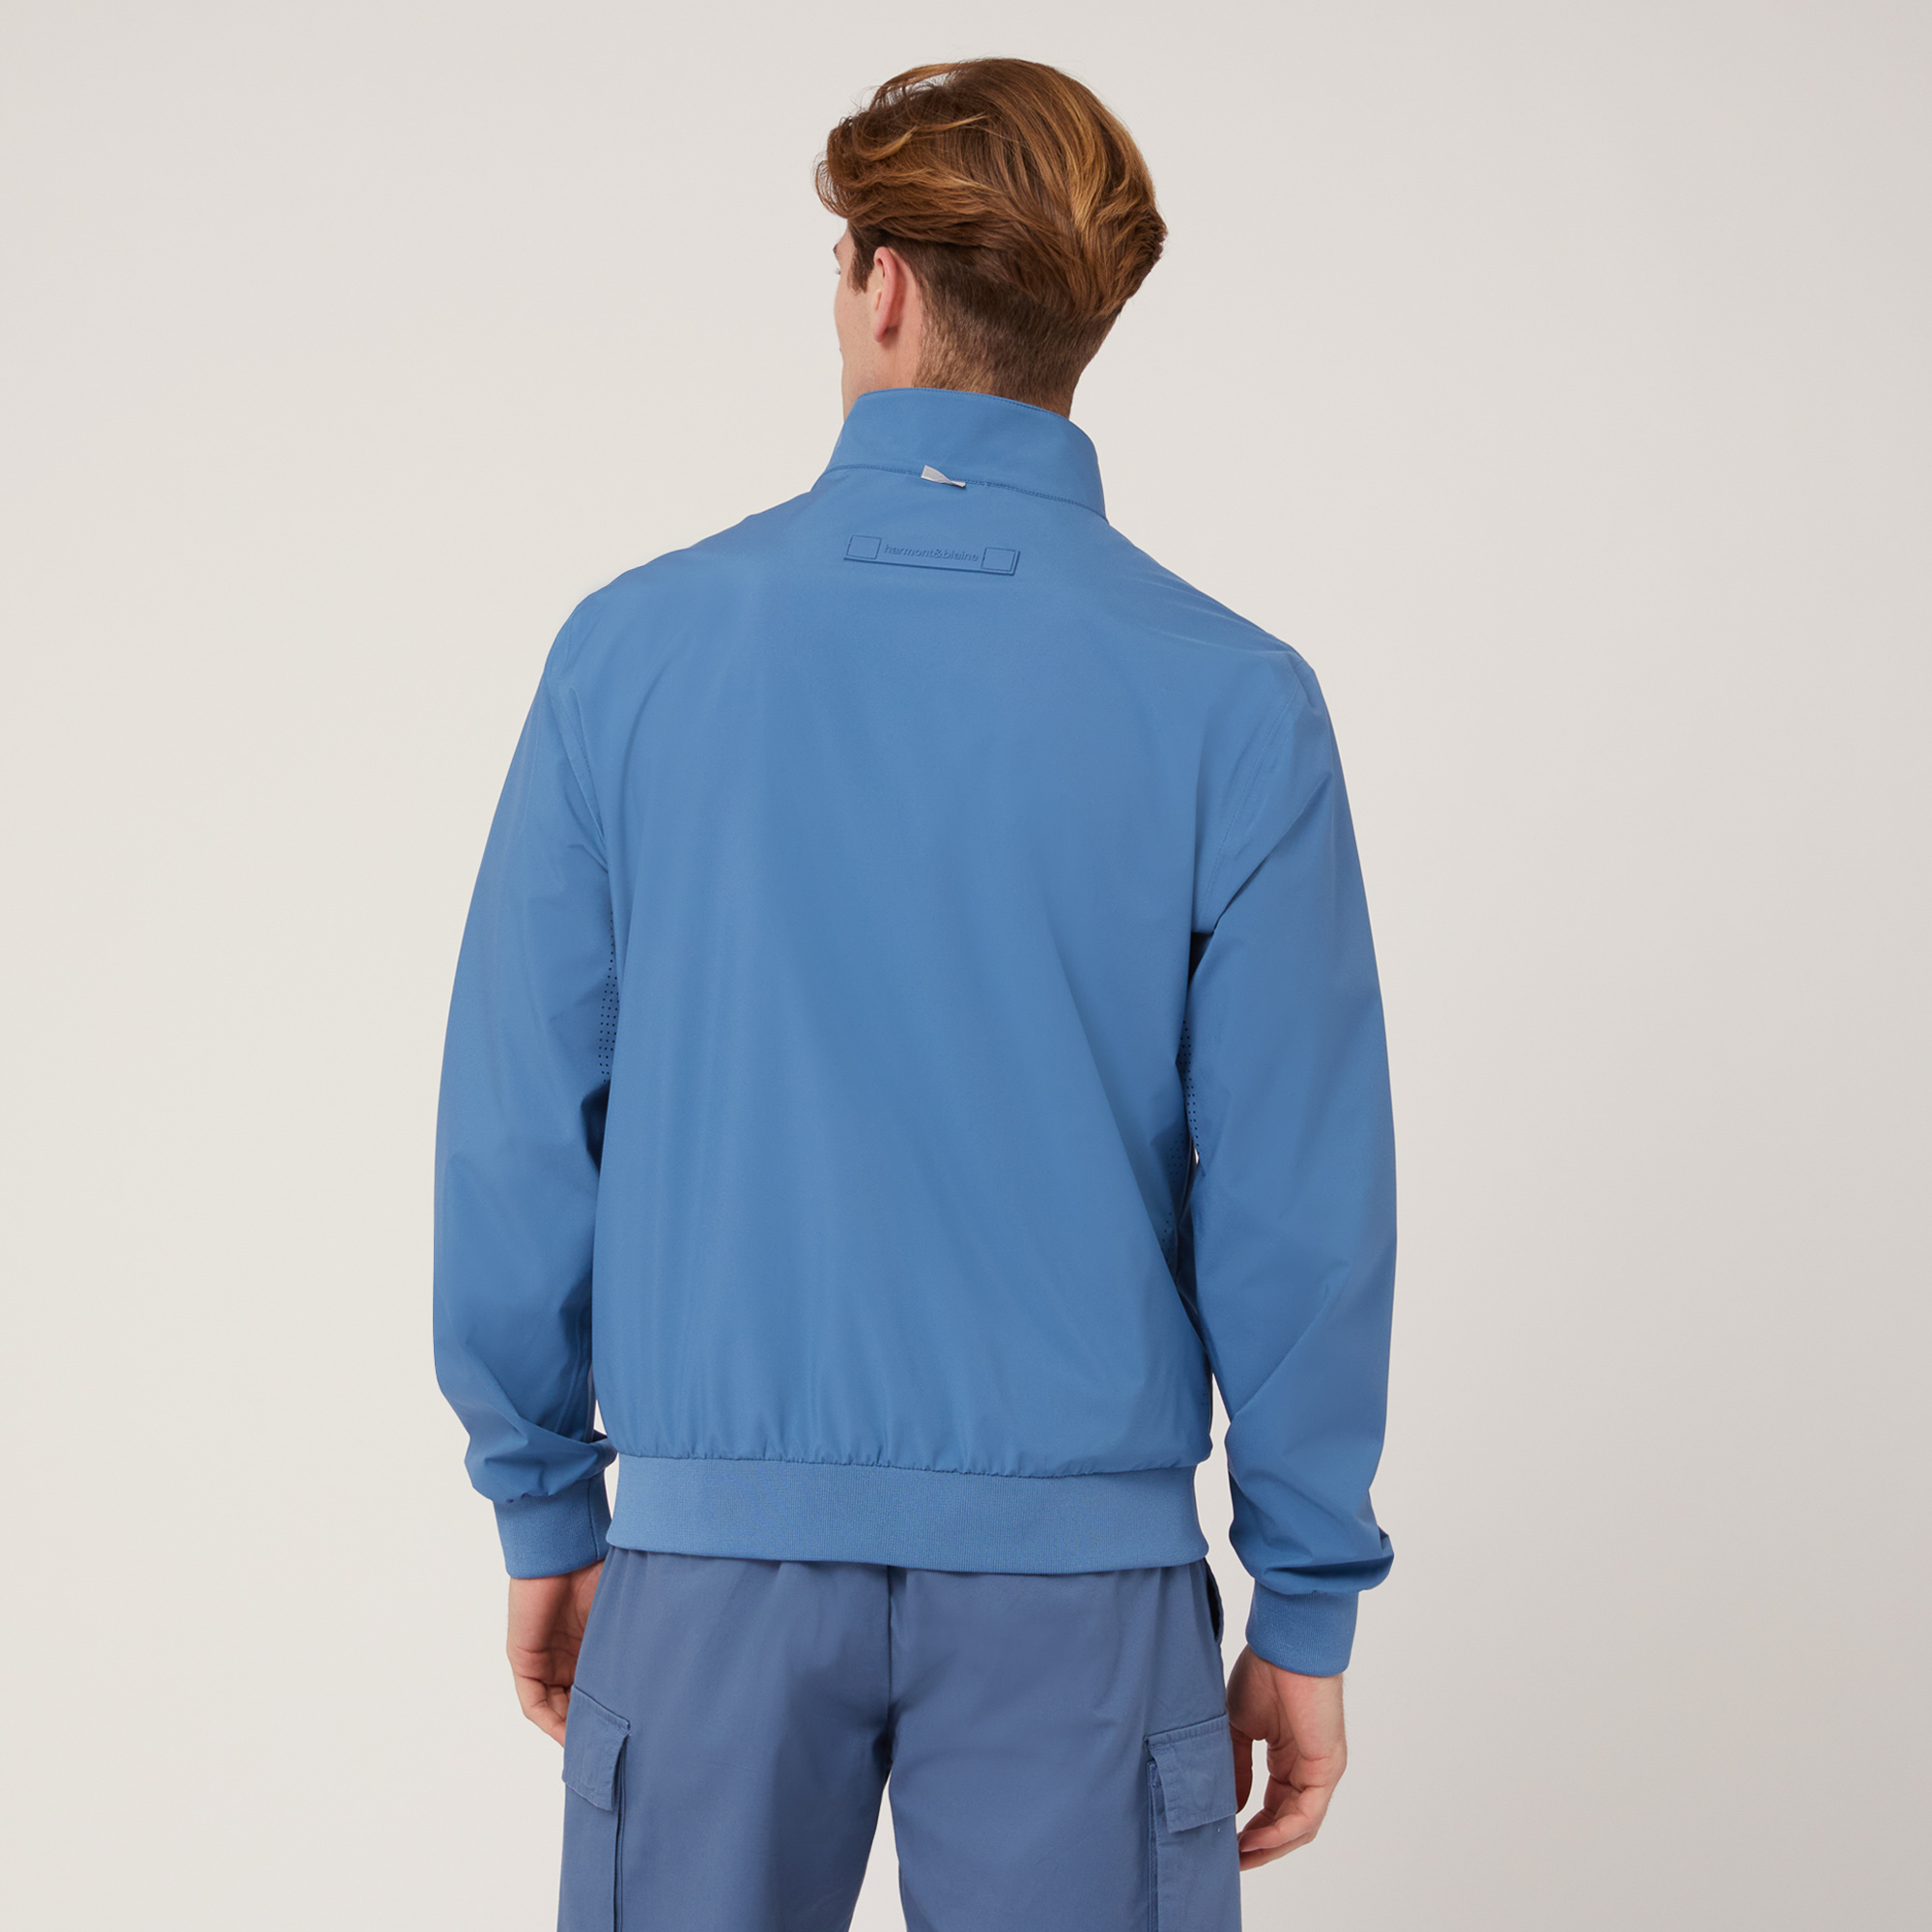 Jacke aus Softshell, Blau, large image number 1